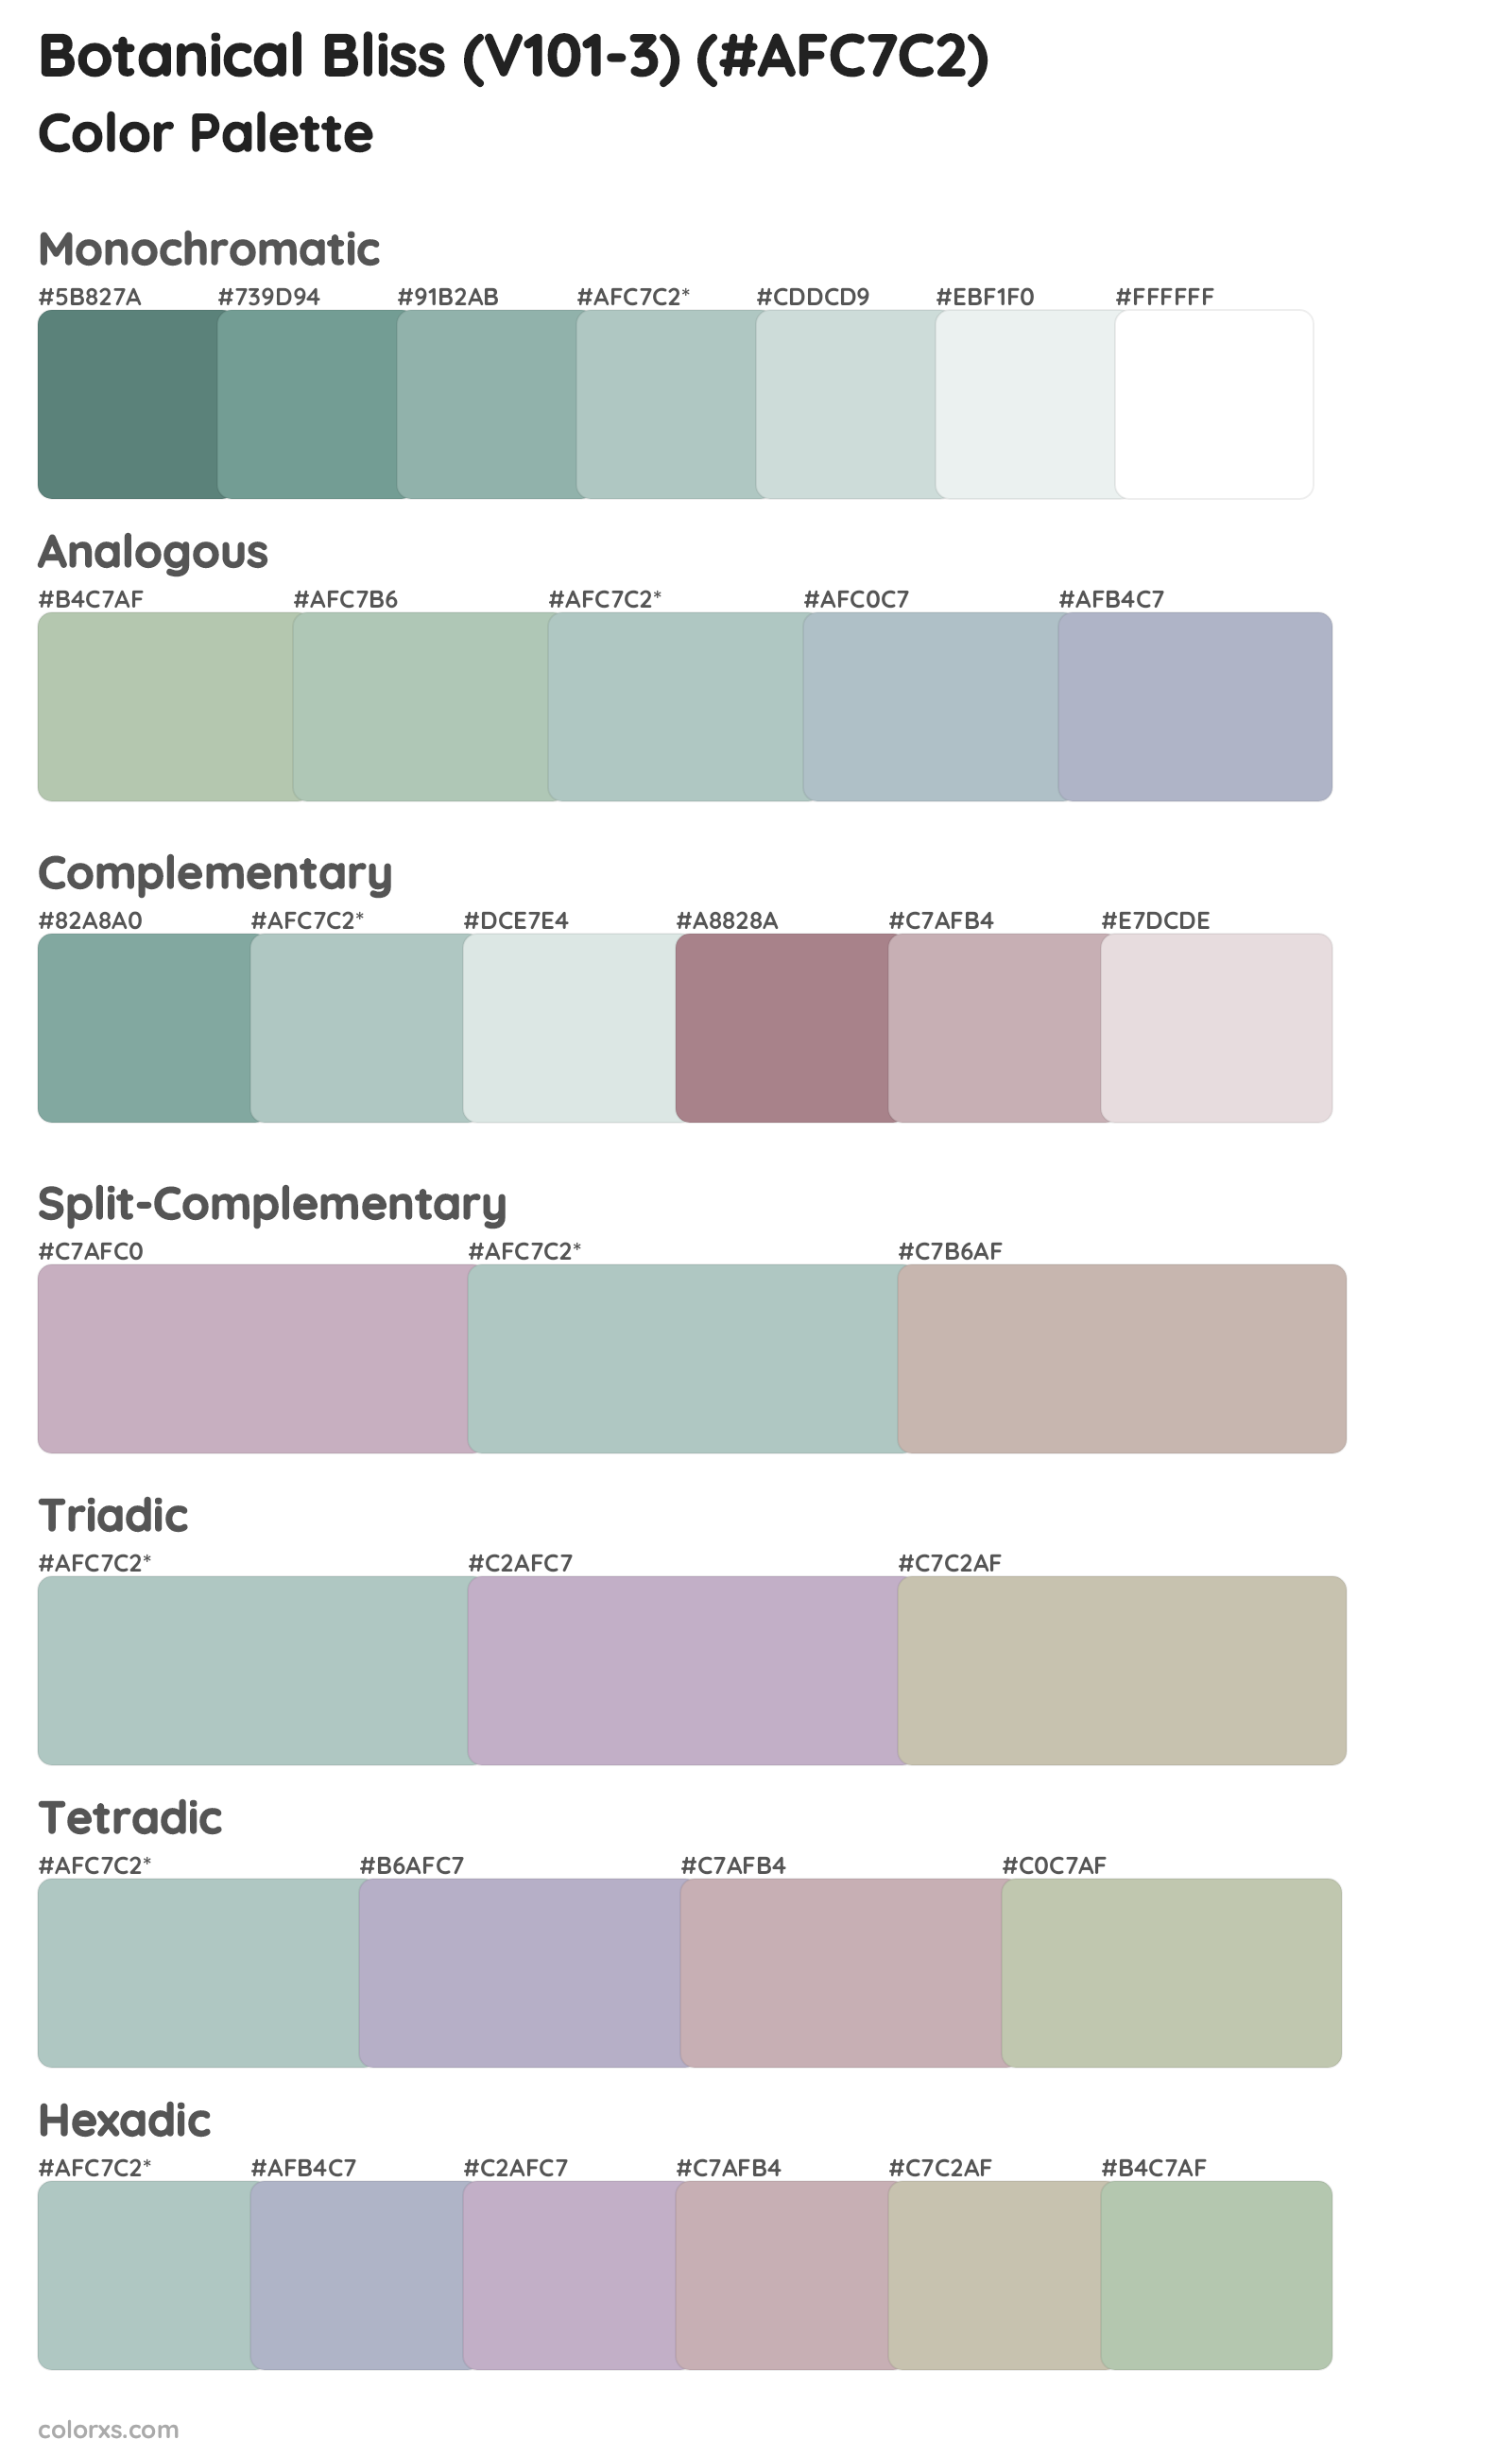 Botanical Bliss (V101-3) Color Scheme Palettes